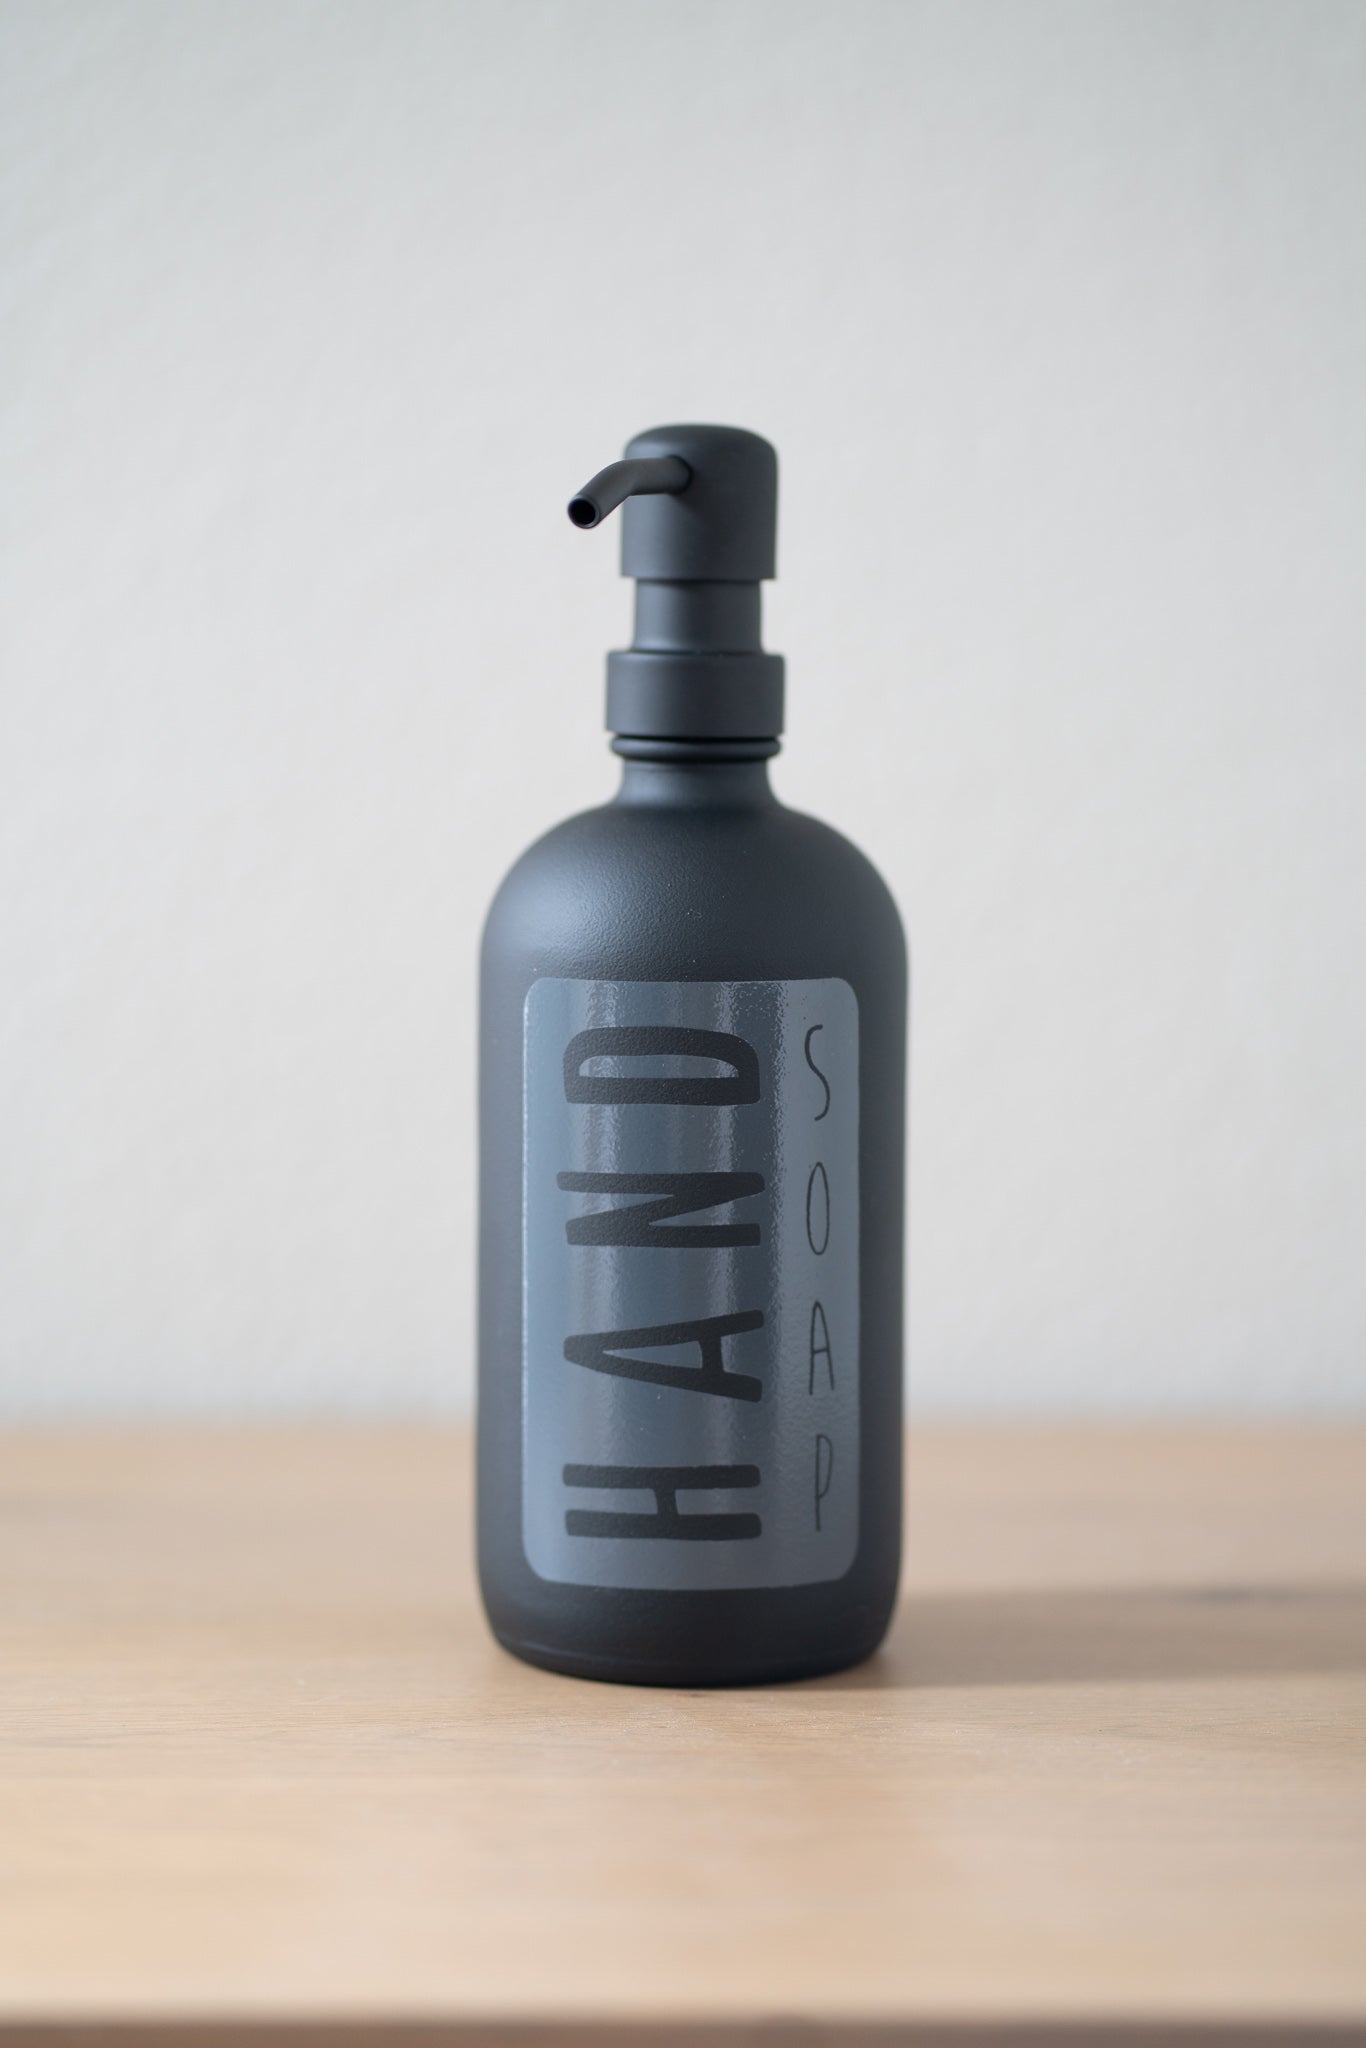 Matte black hand soap bottle